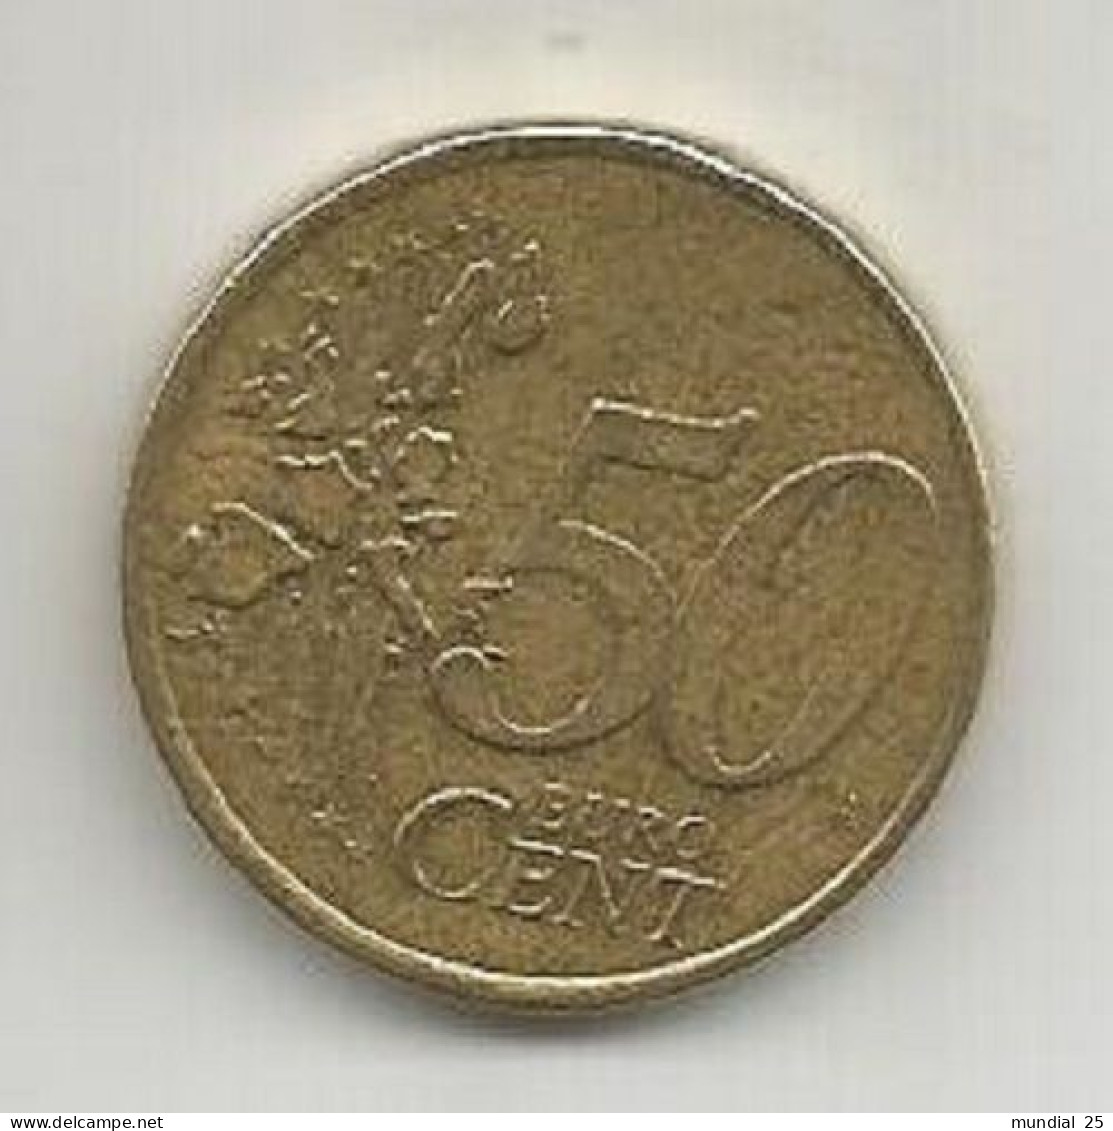 LUXEMBOURG 50 EURO CENT 2002 - Luxemburgo